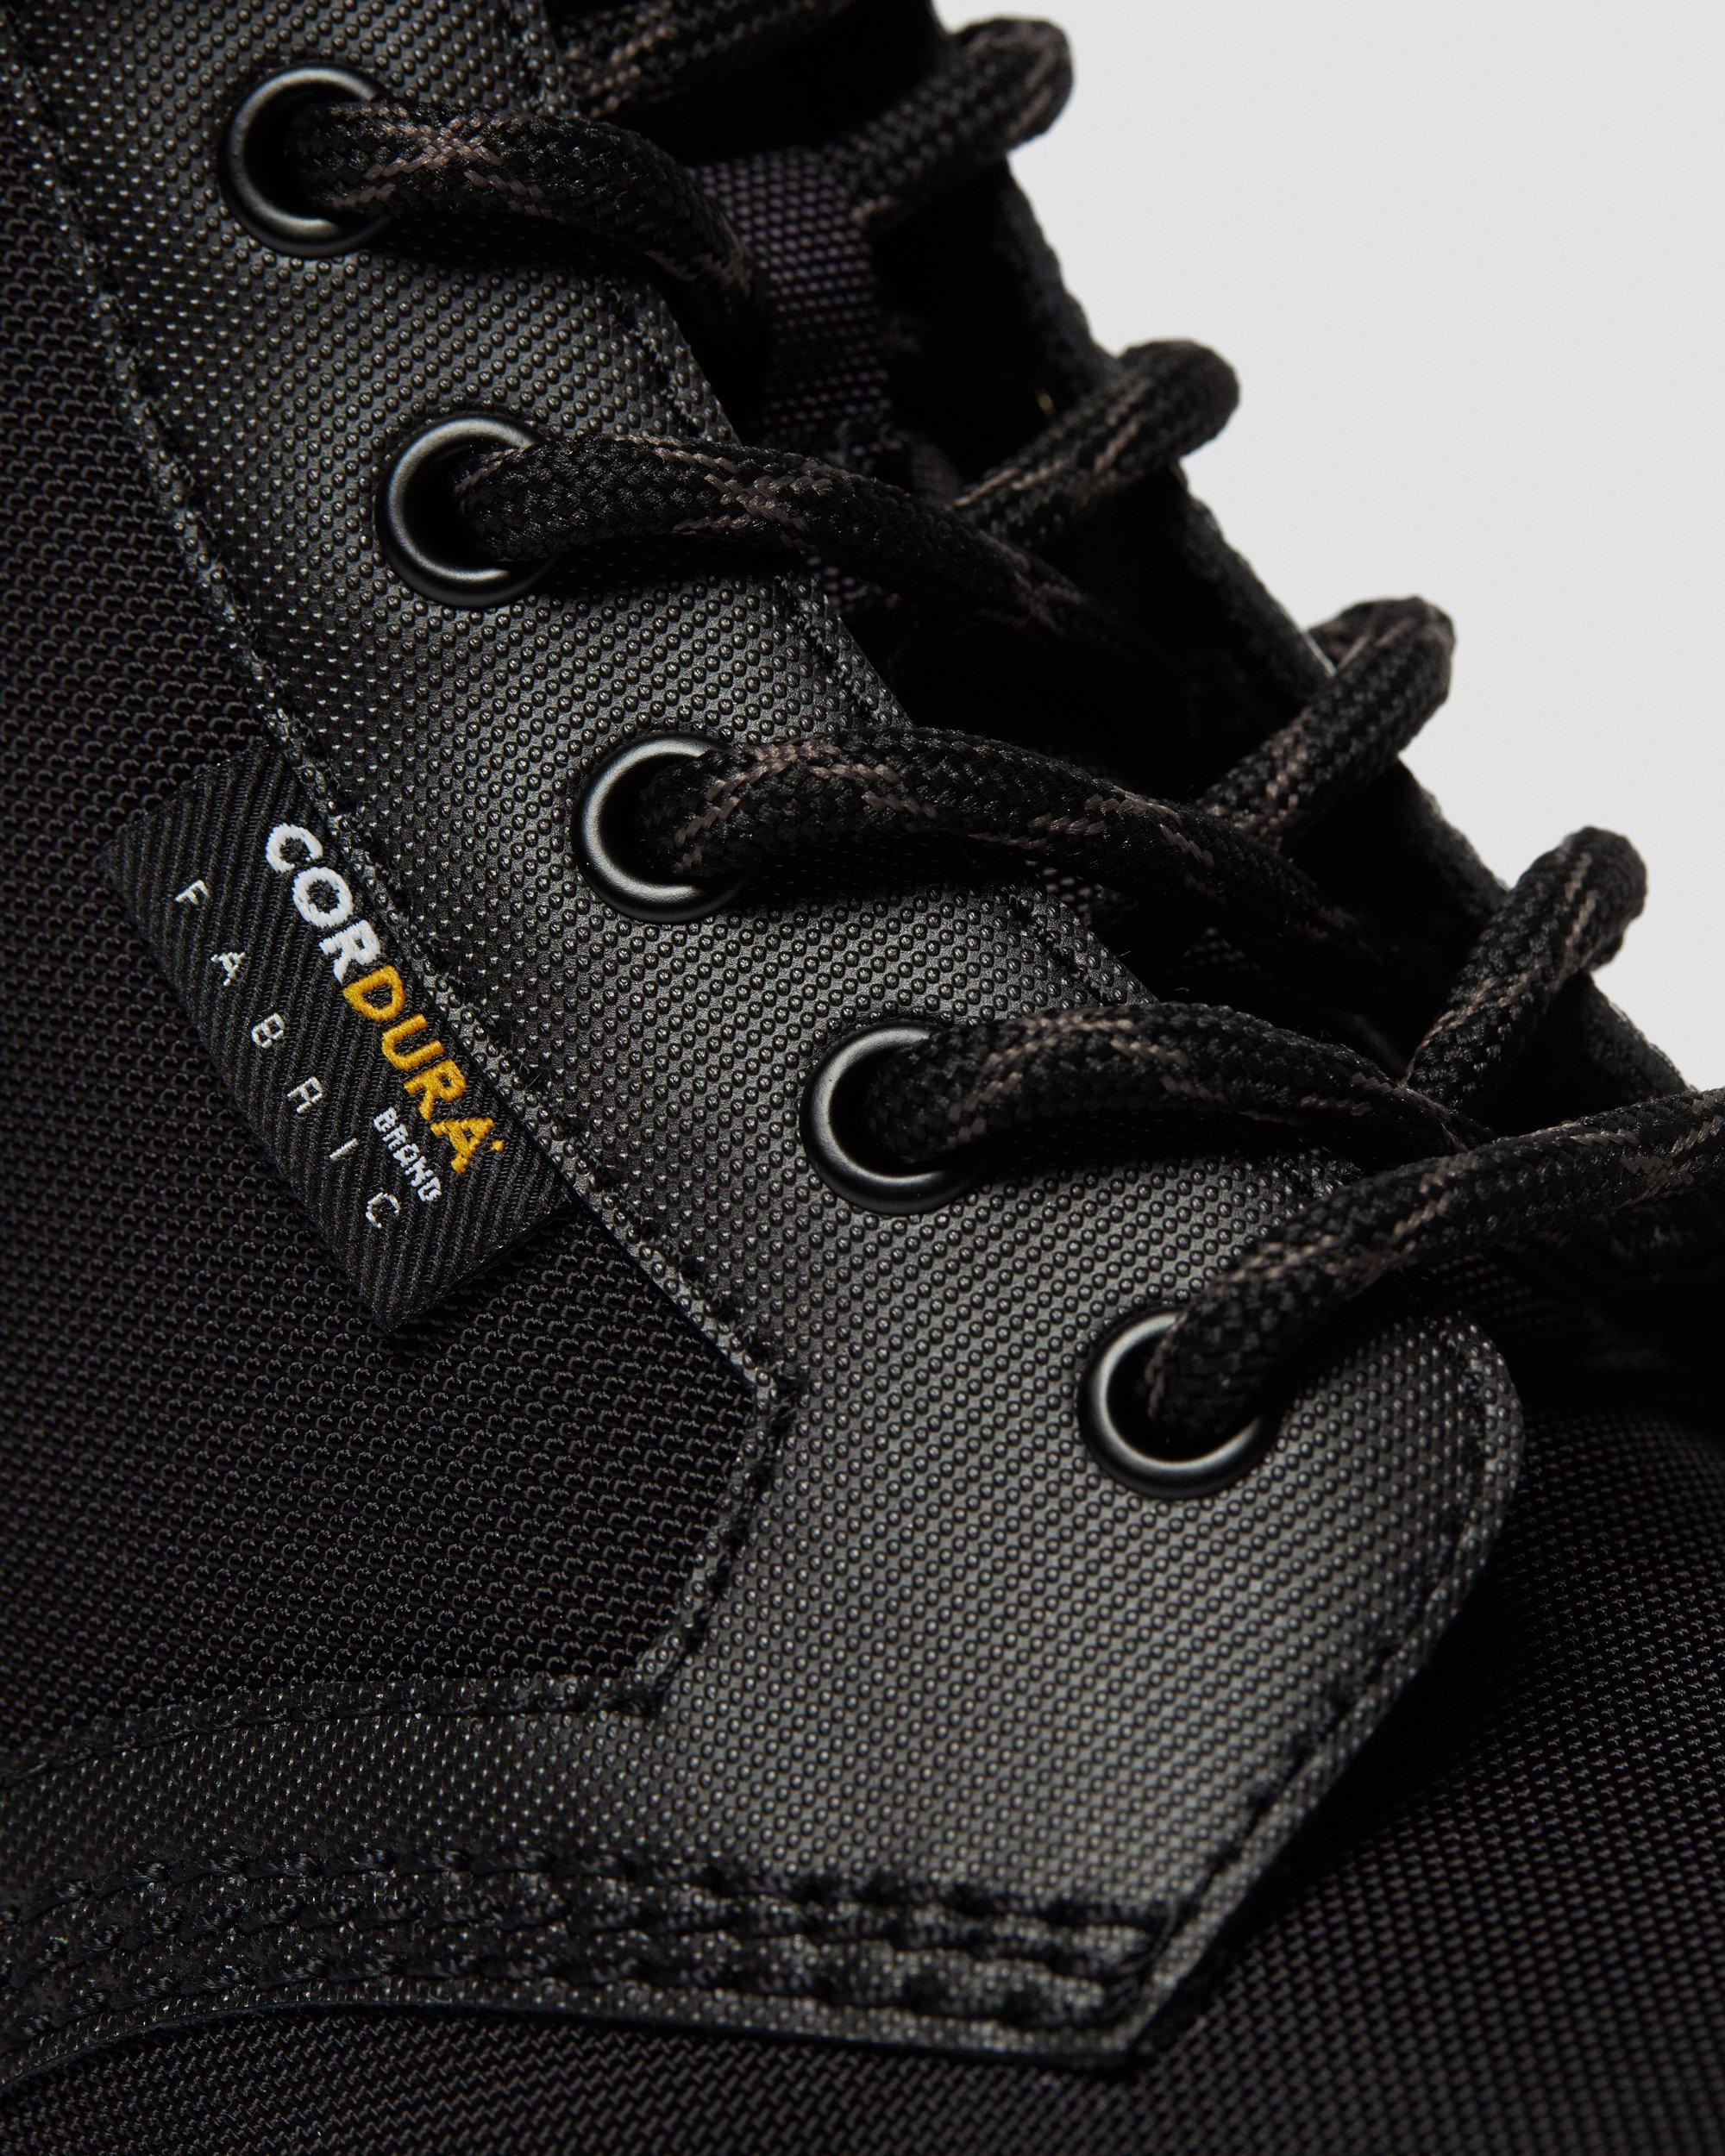 Combs Tech Jungle Casual Boots | Dr. Martens